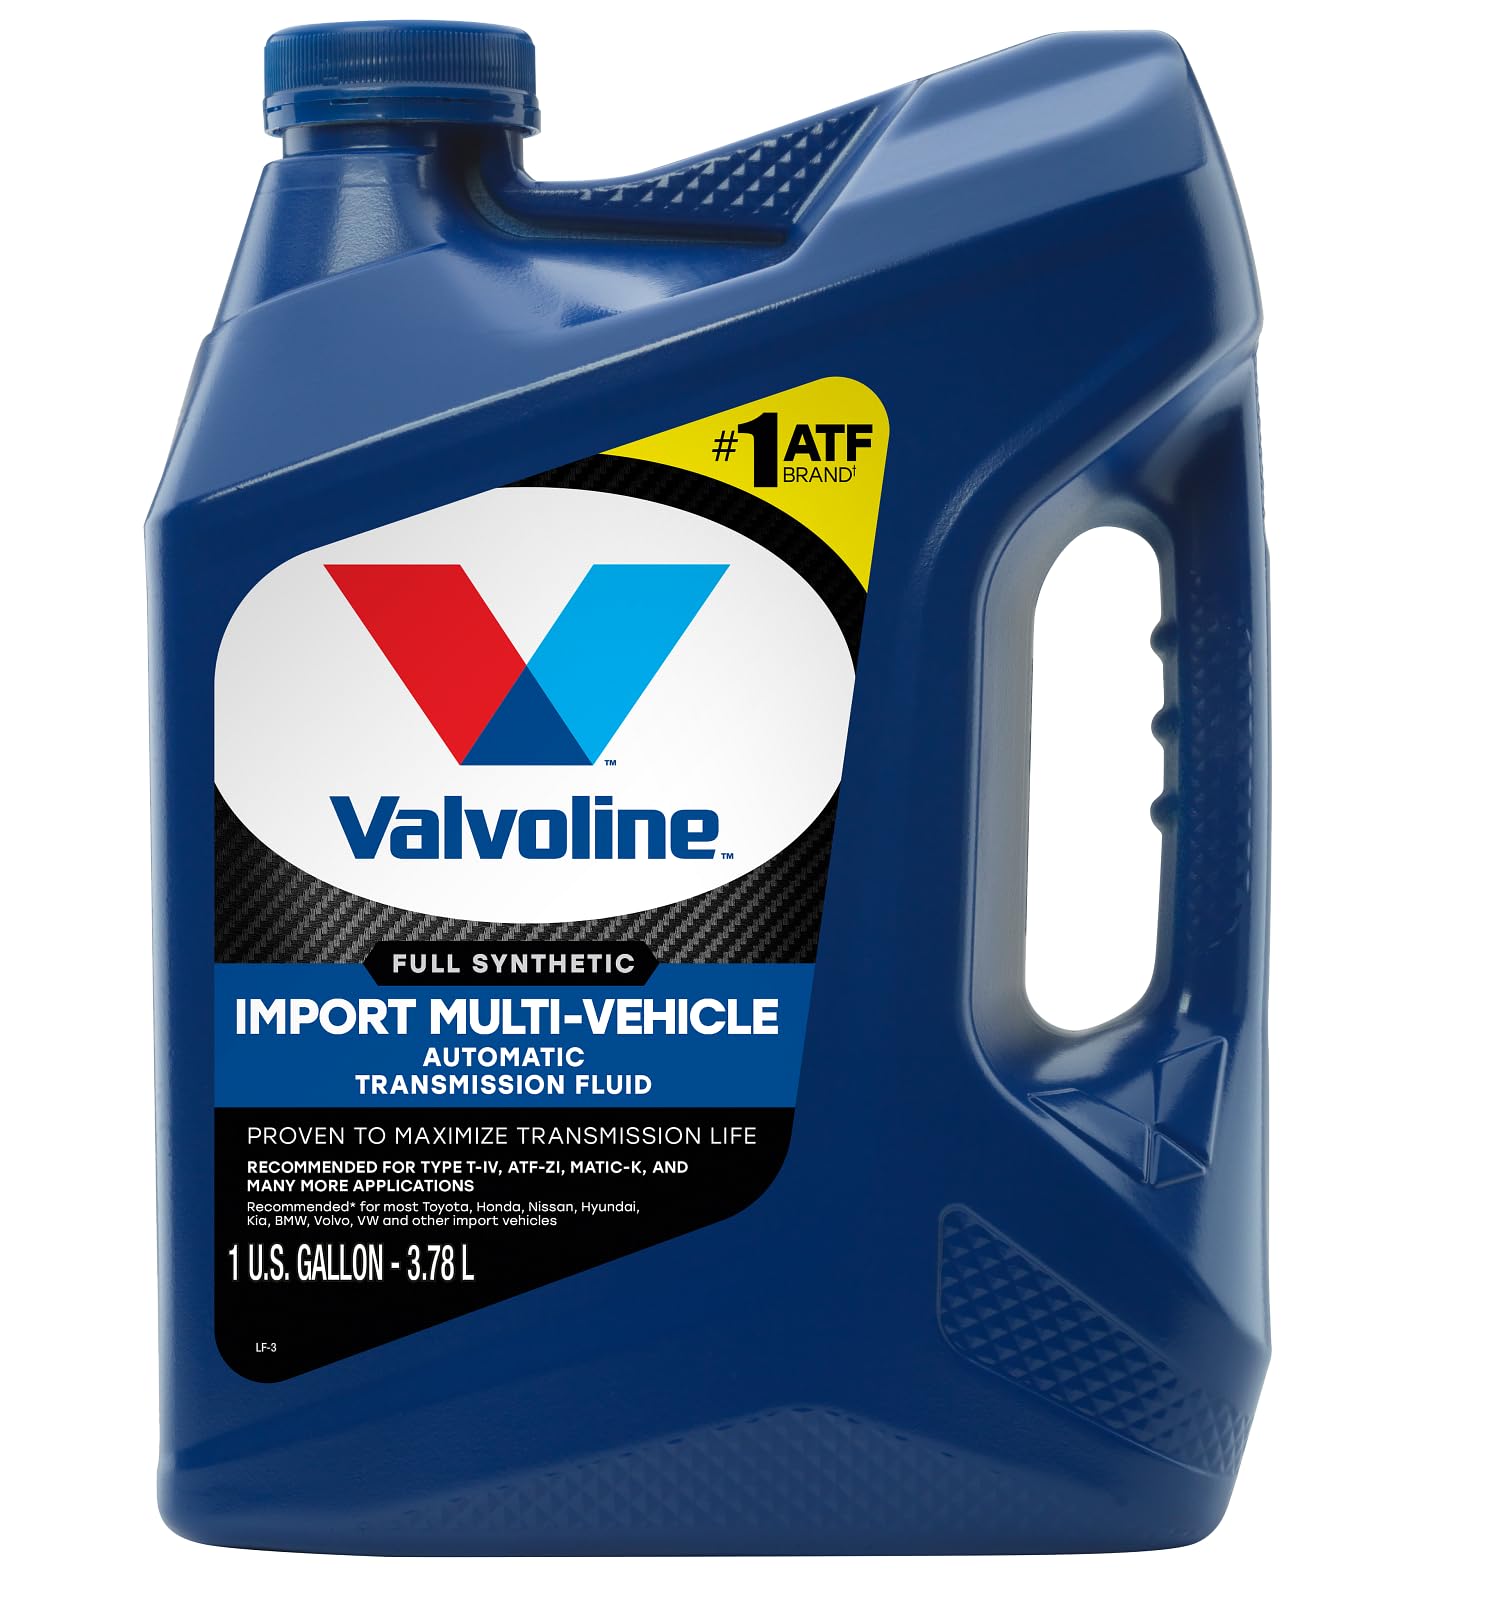 Valvoline Import Multi-Vehicle (ATF) Full Synthetic Automatic Transmission Flui